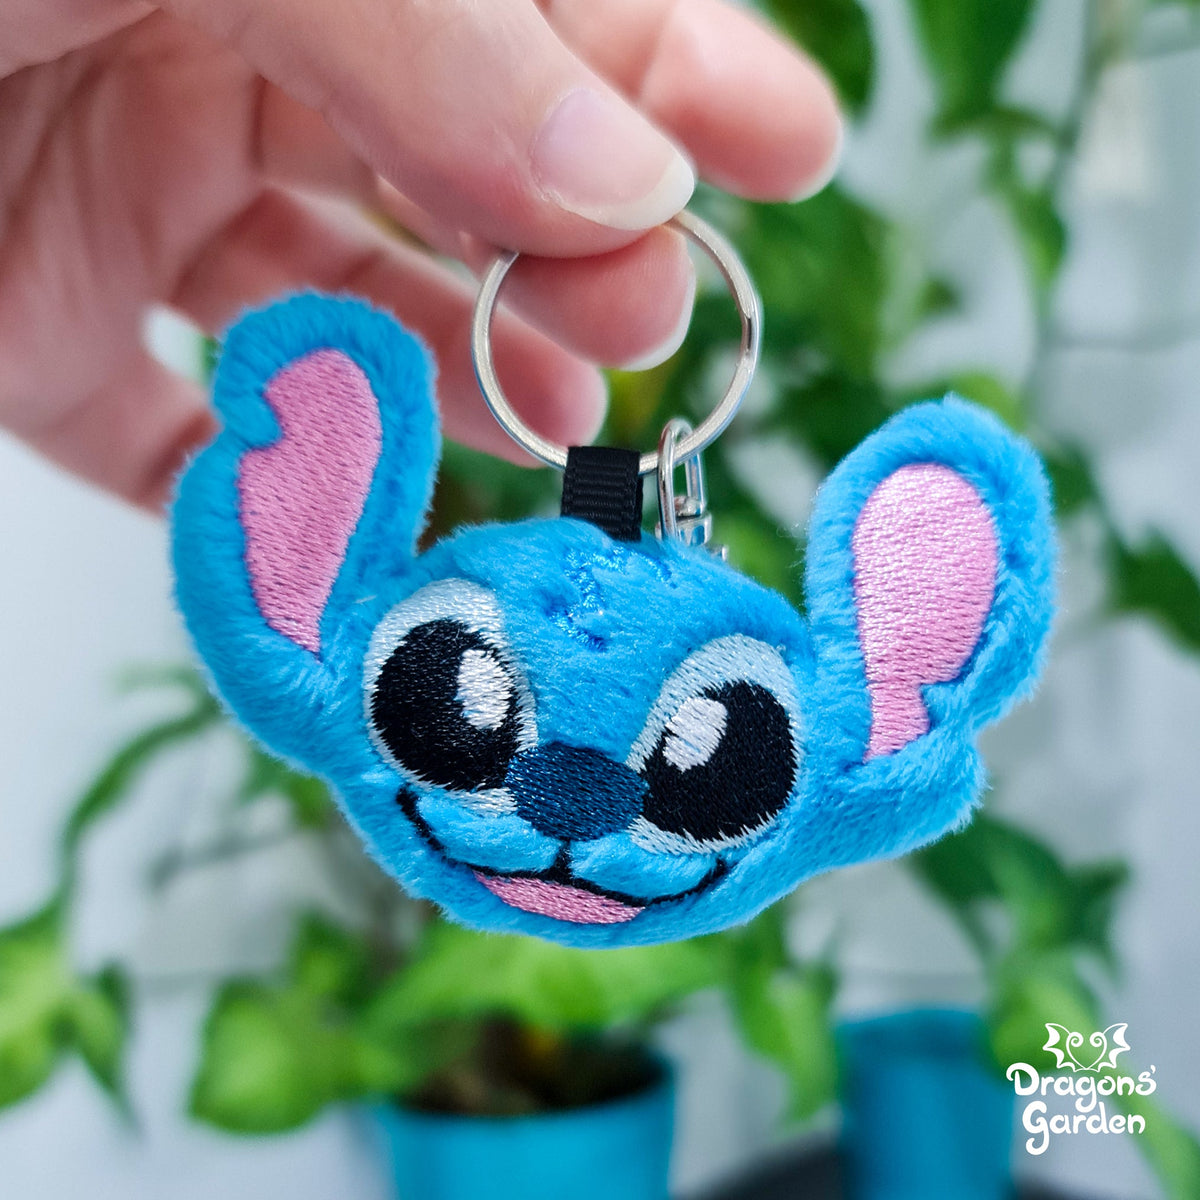 Keep Stitch Hanging Around With New Plush Keychain! 